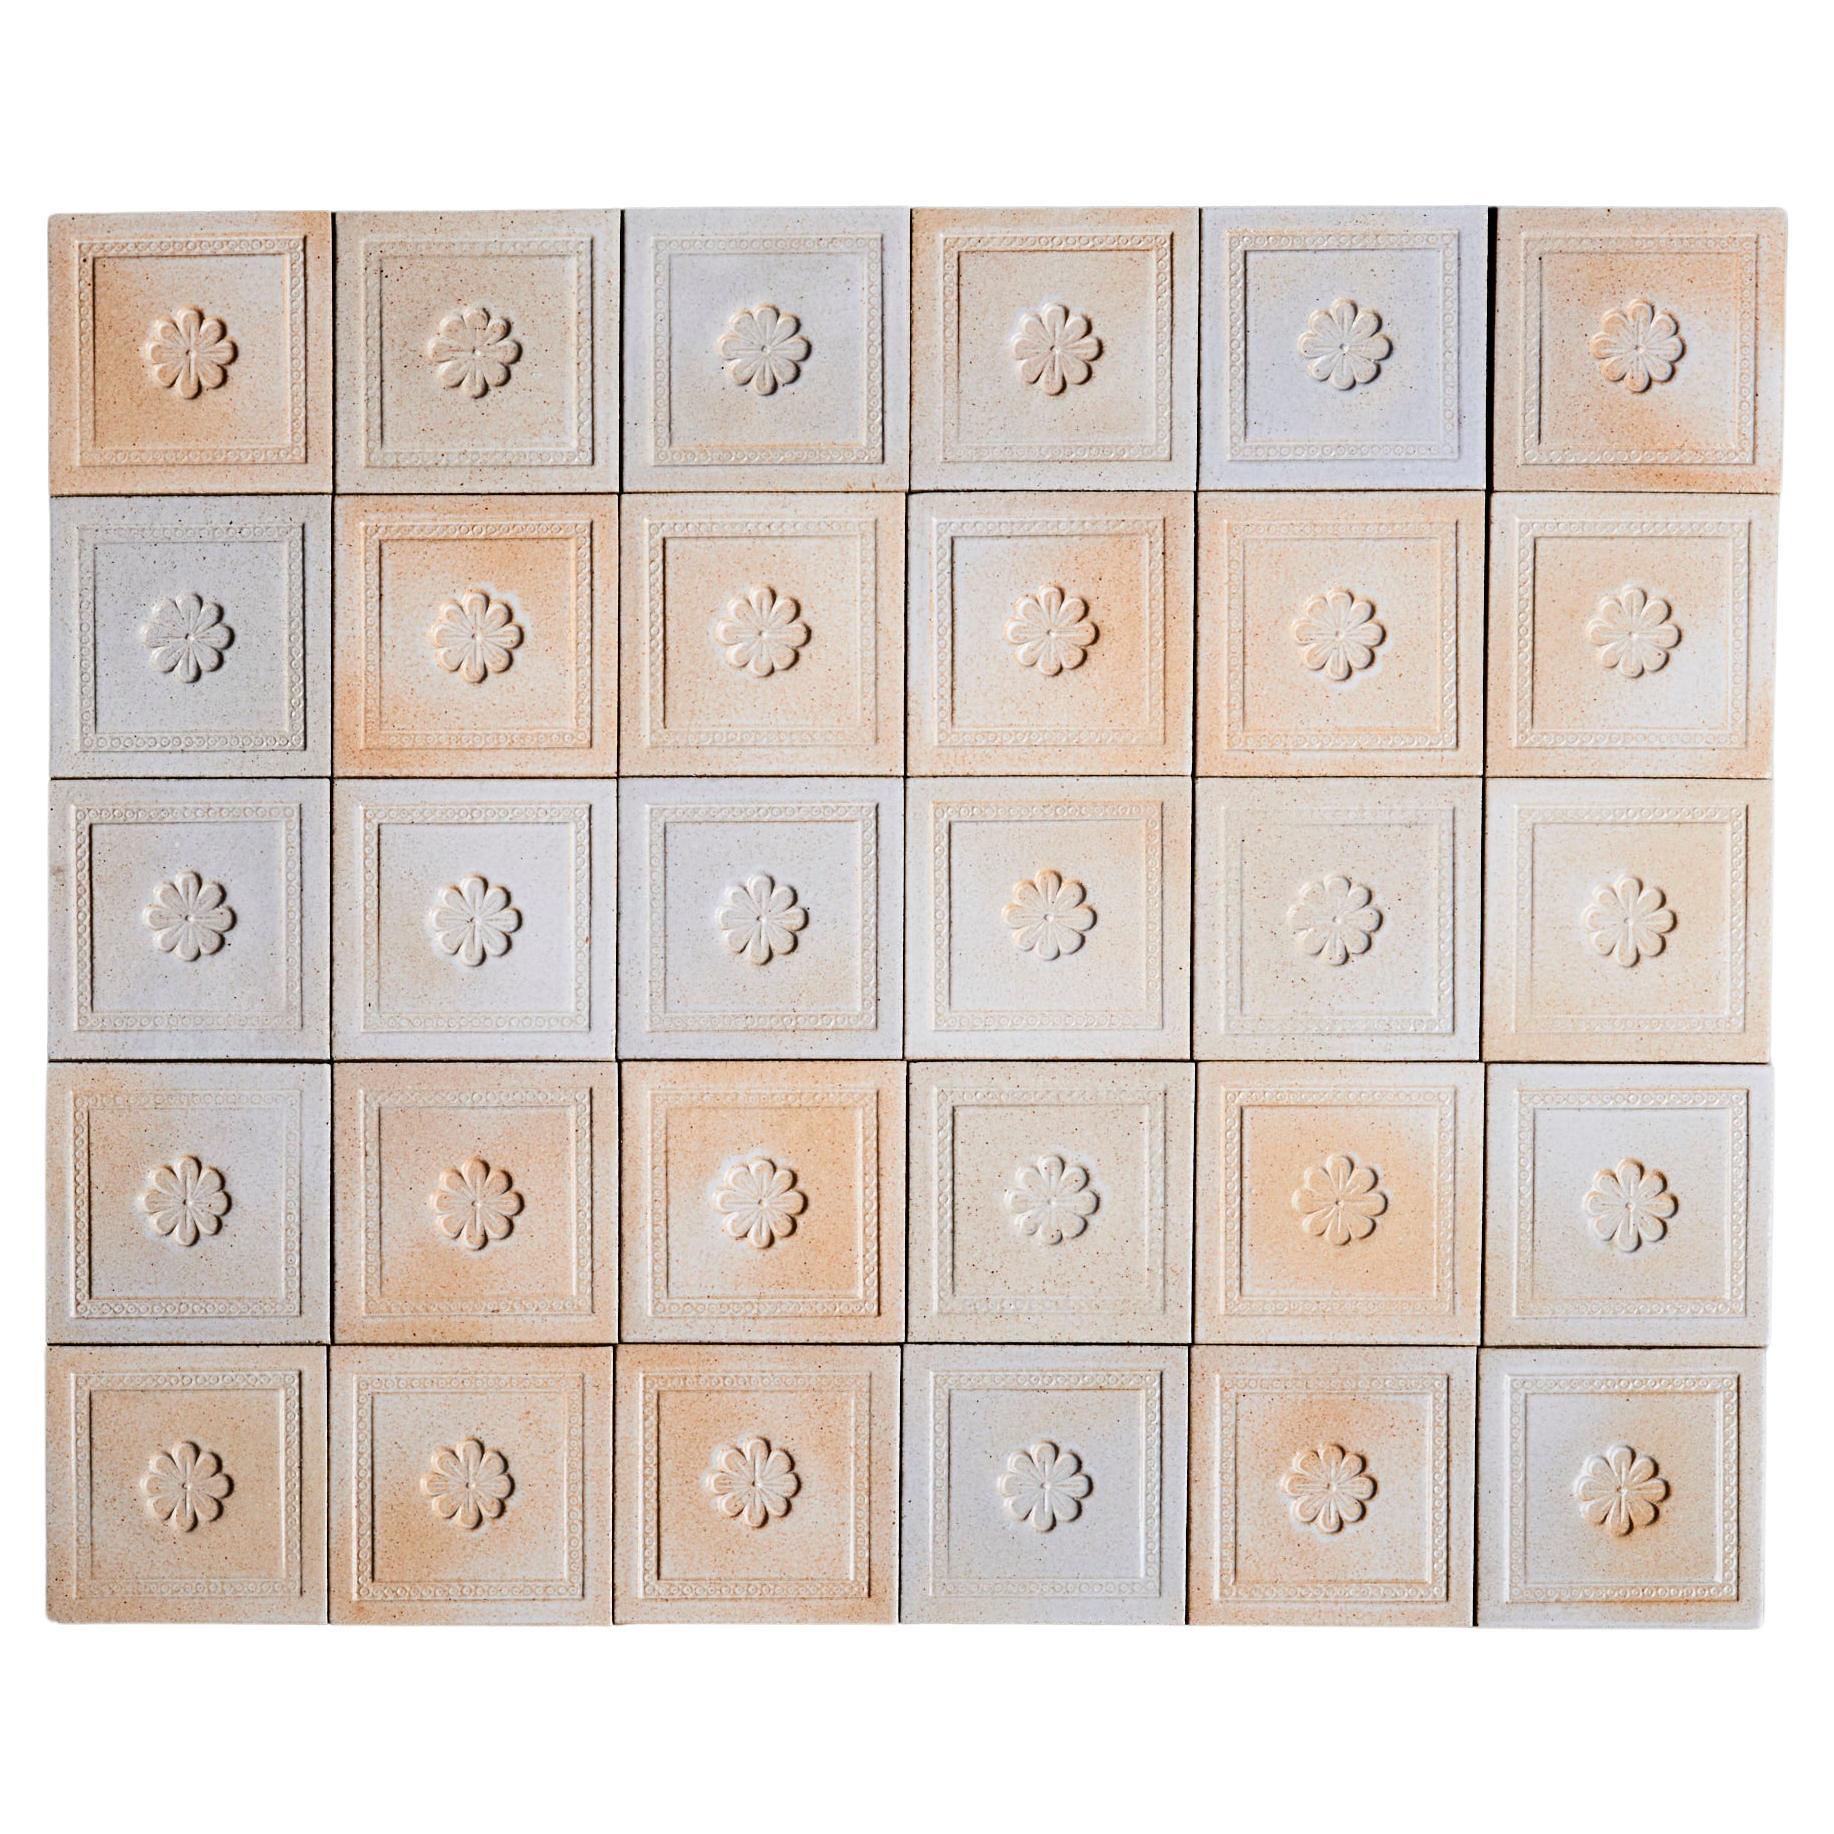 Set of 25 tiles by Roger Capron, France - 1970s. 